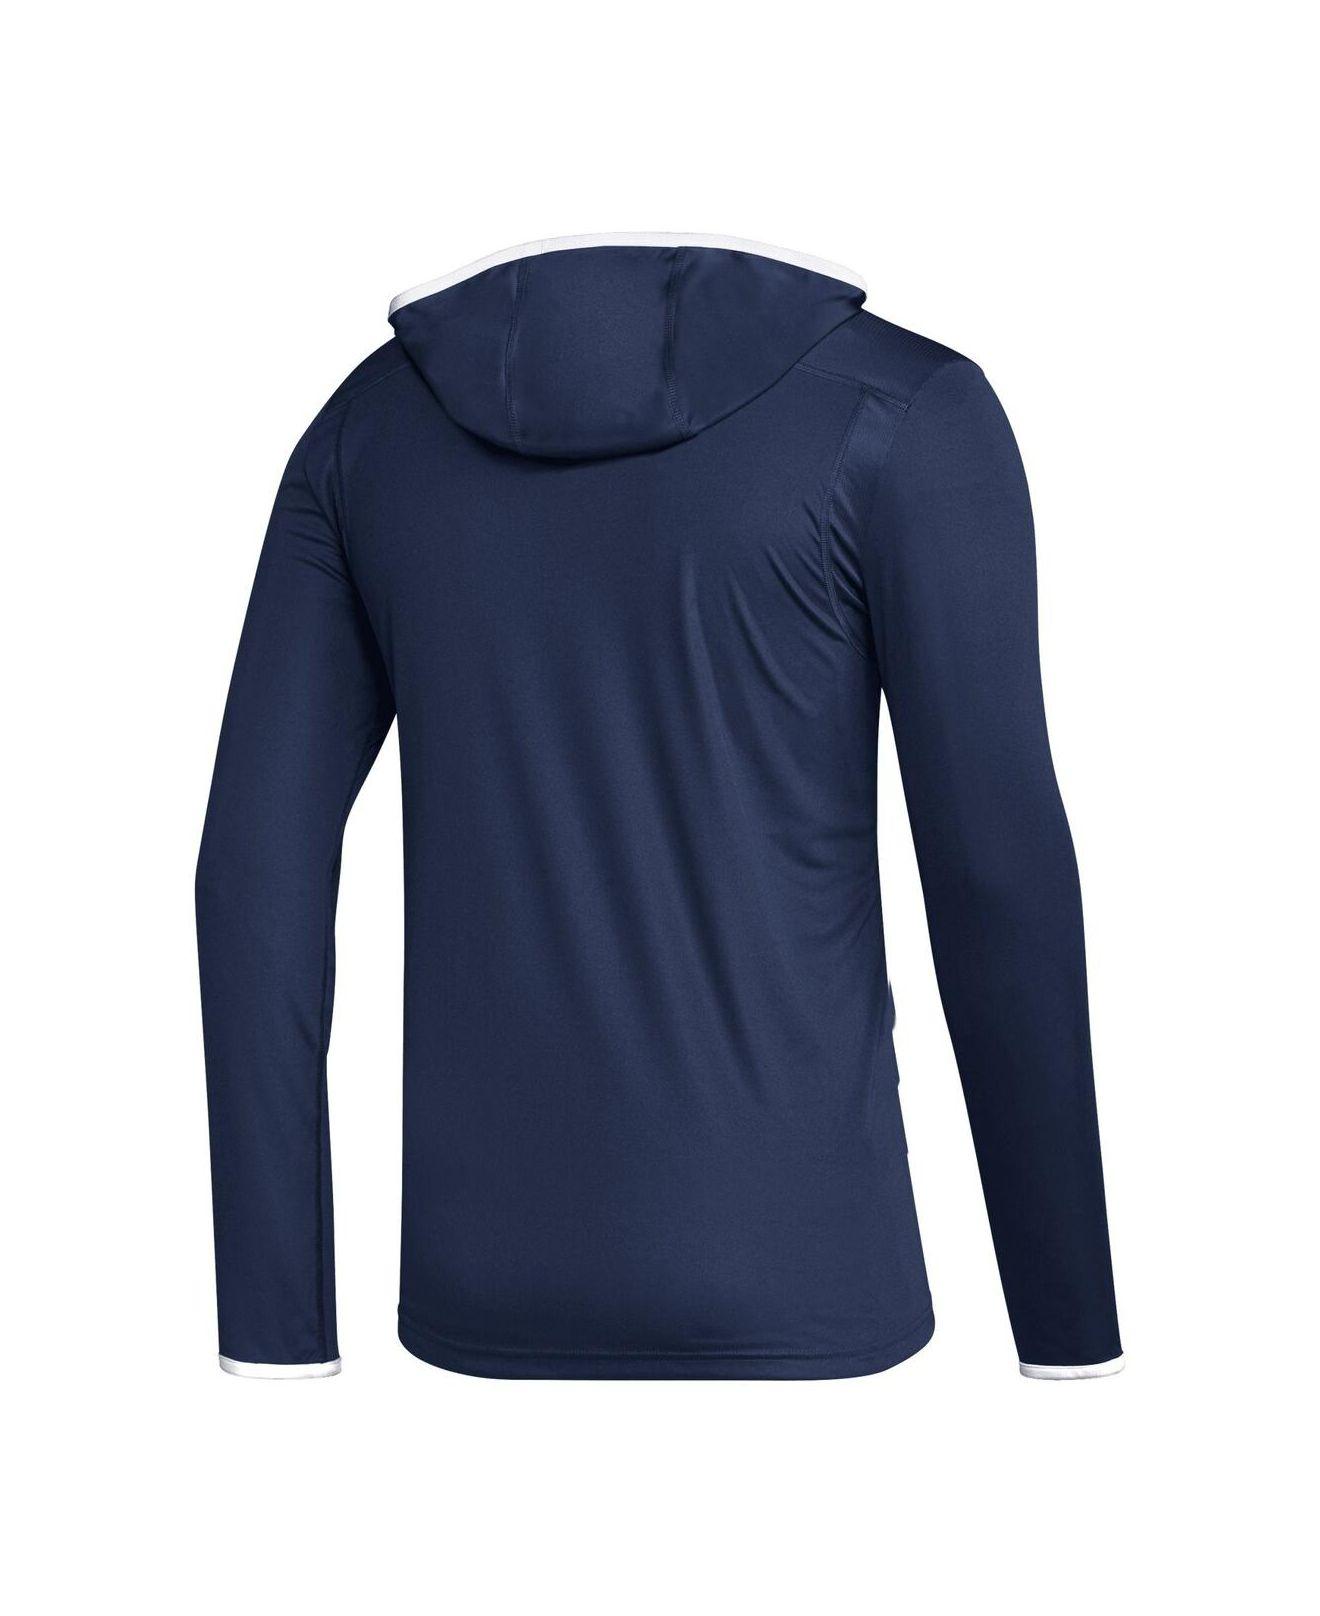 St. Louis Blues adidas Team Long Sleeve Quarter-Zip Hoodie T-Shirt